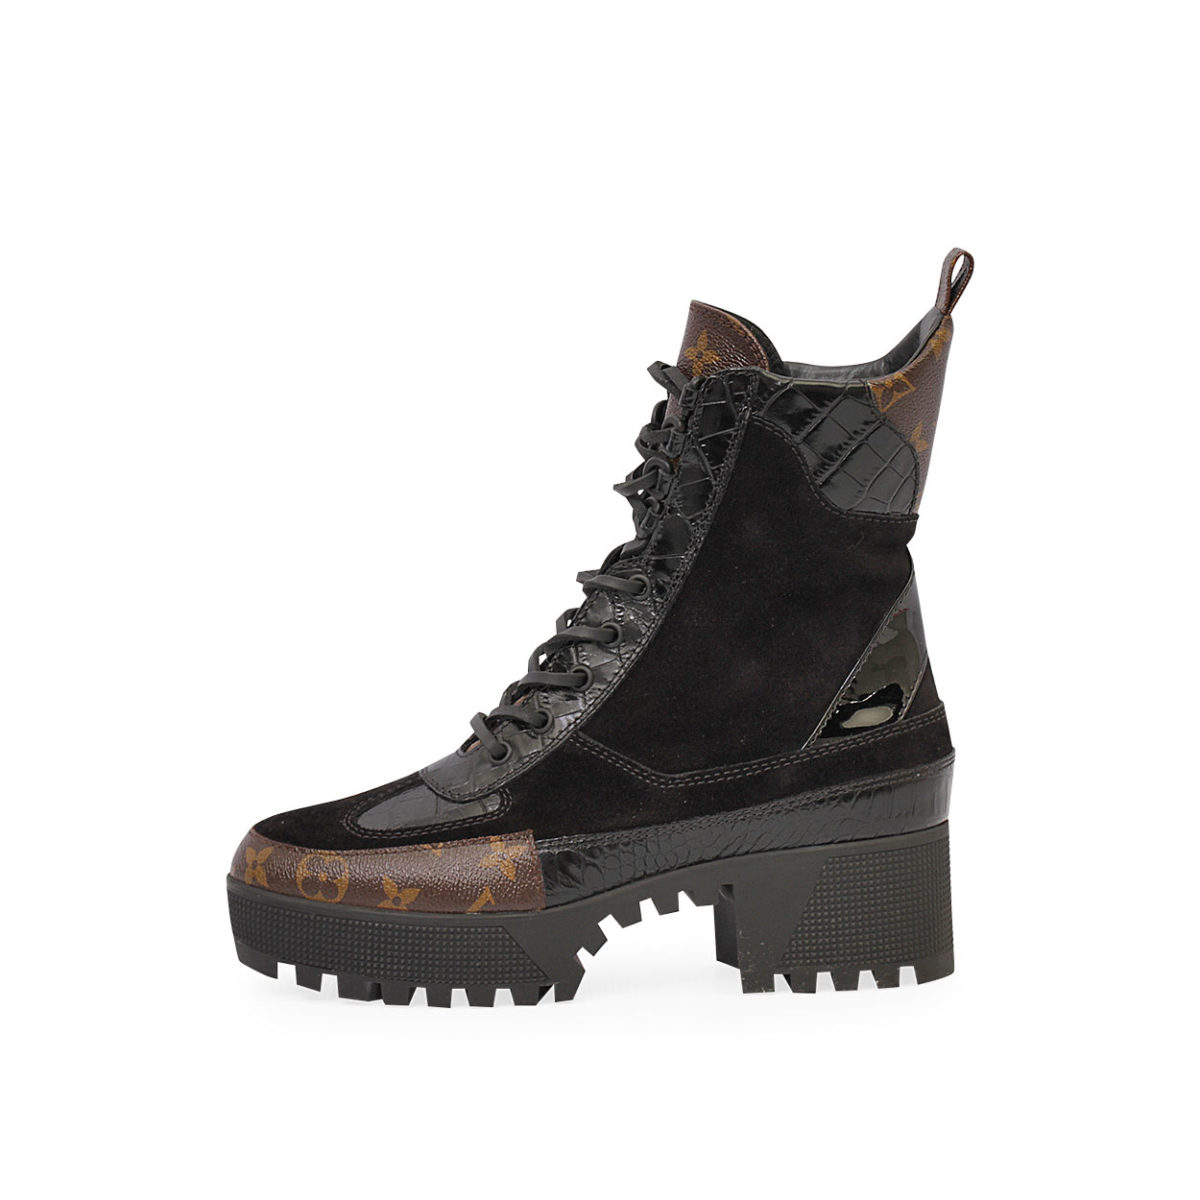 Louis Vuitton Black/Brown Suede, Monogram Canvas And Leather Laureate  Platform Desert Ankle Boots Size 38